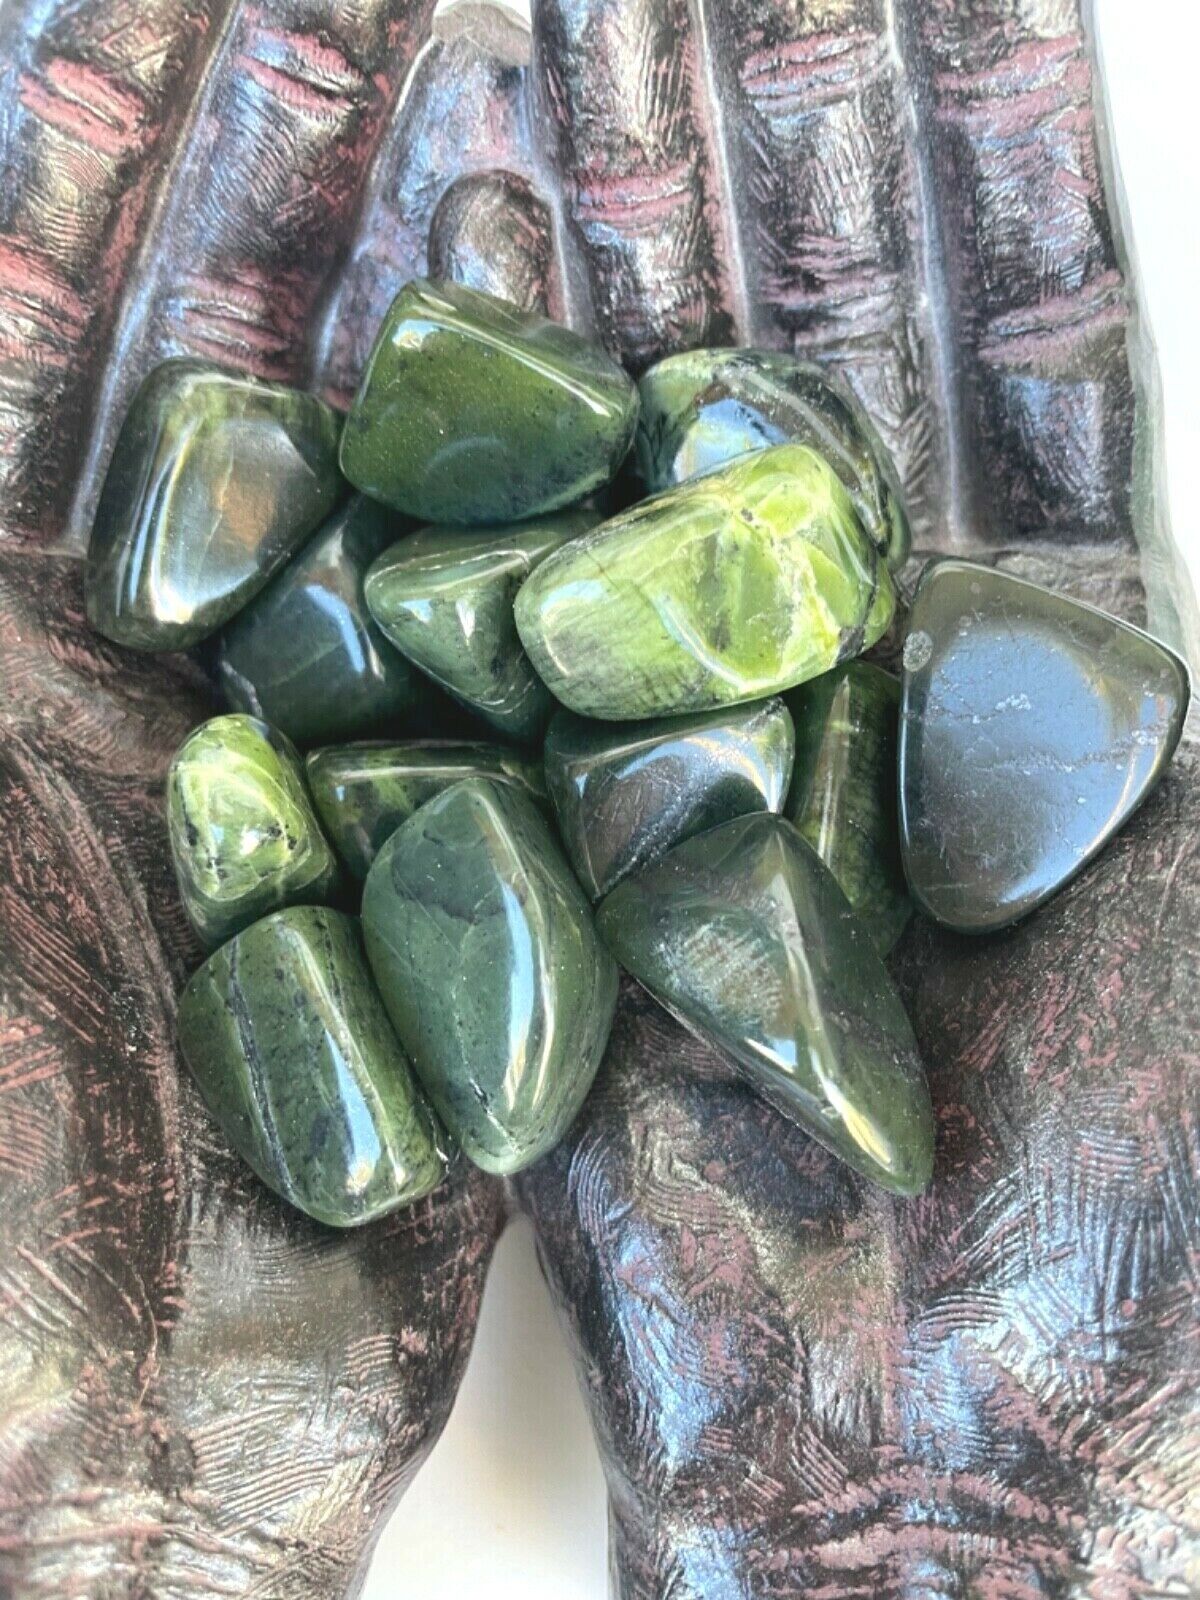 1X Canada Nephrite Jade Tumbled Stones 25-30mm LG Healing Crystal Health Wealth 